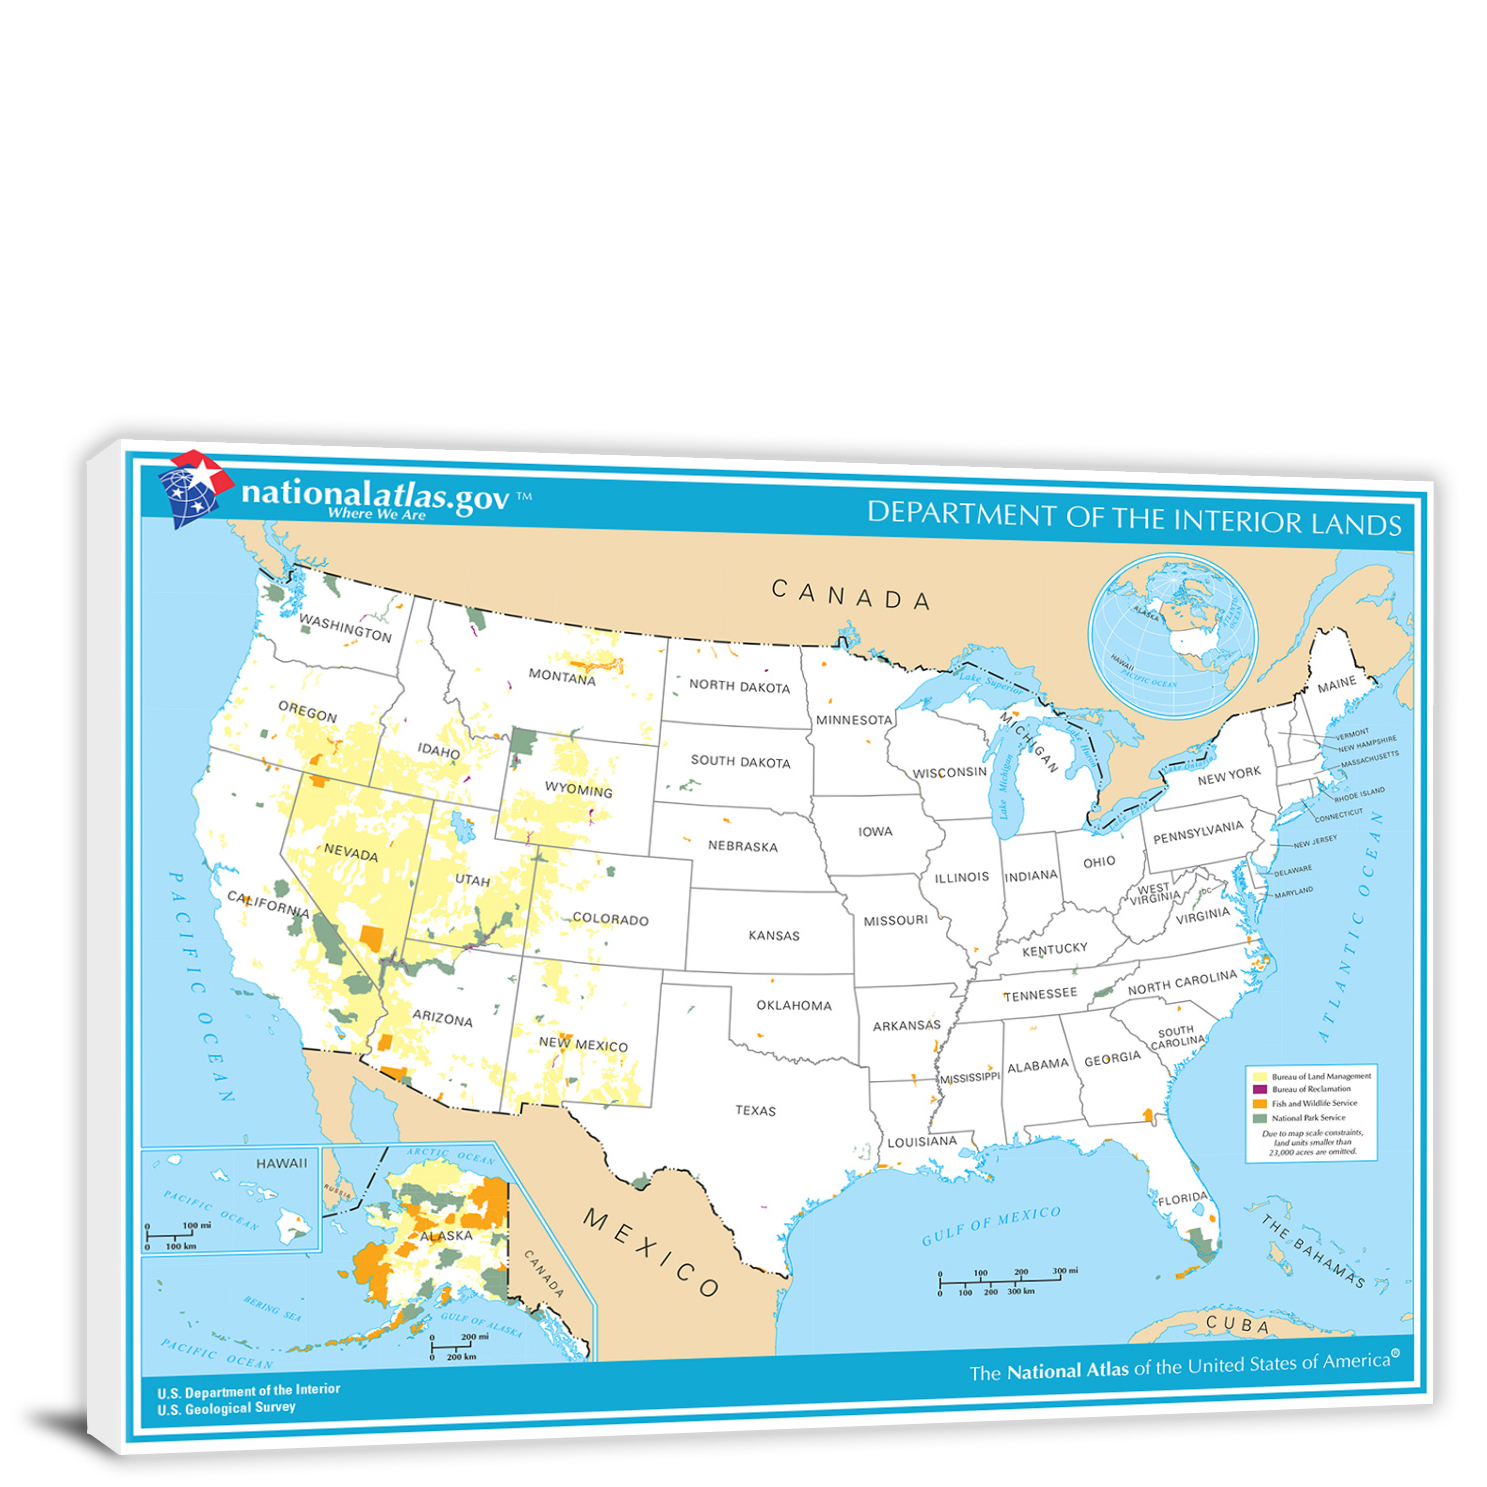 CWA370 Usa National Atlas Department Of Interior Lands Map 00 